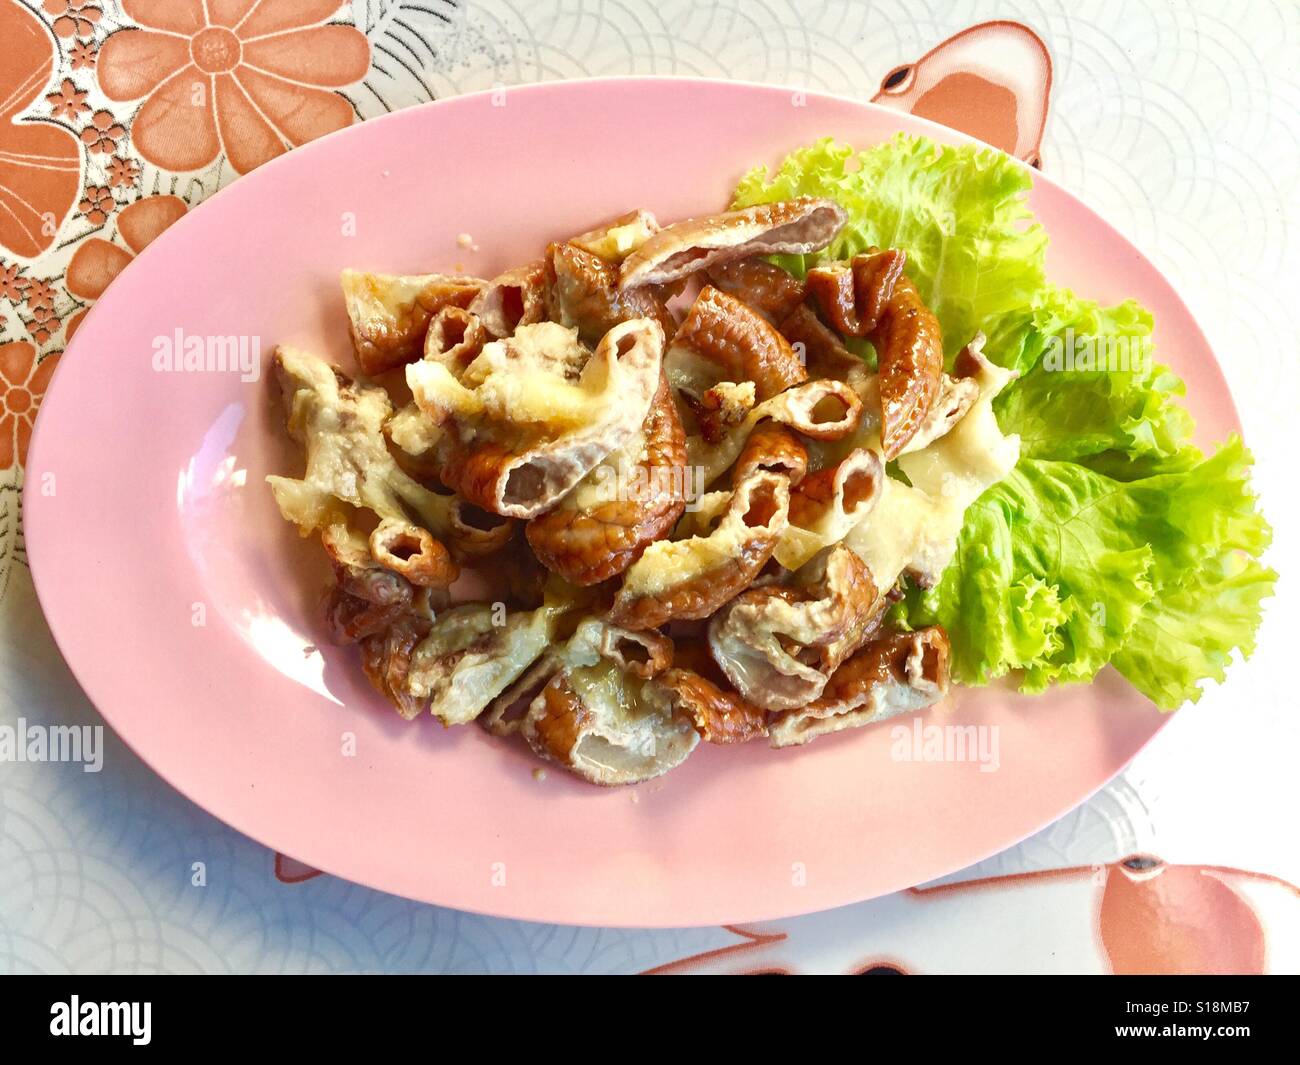 Exotic Thai food - A plate of Sai Moo Yang (Grilled pork intestines, Chiang Mai, Thailand Stock Photo